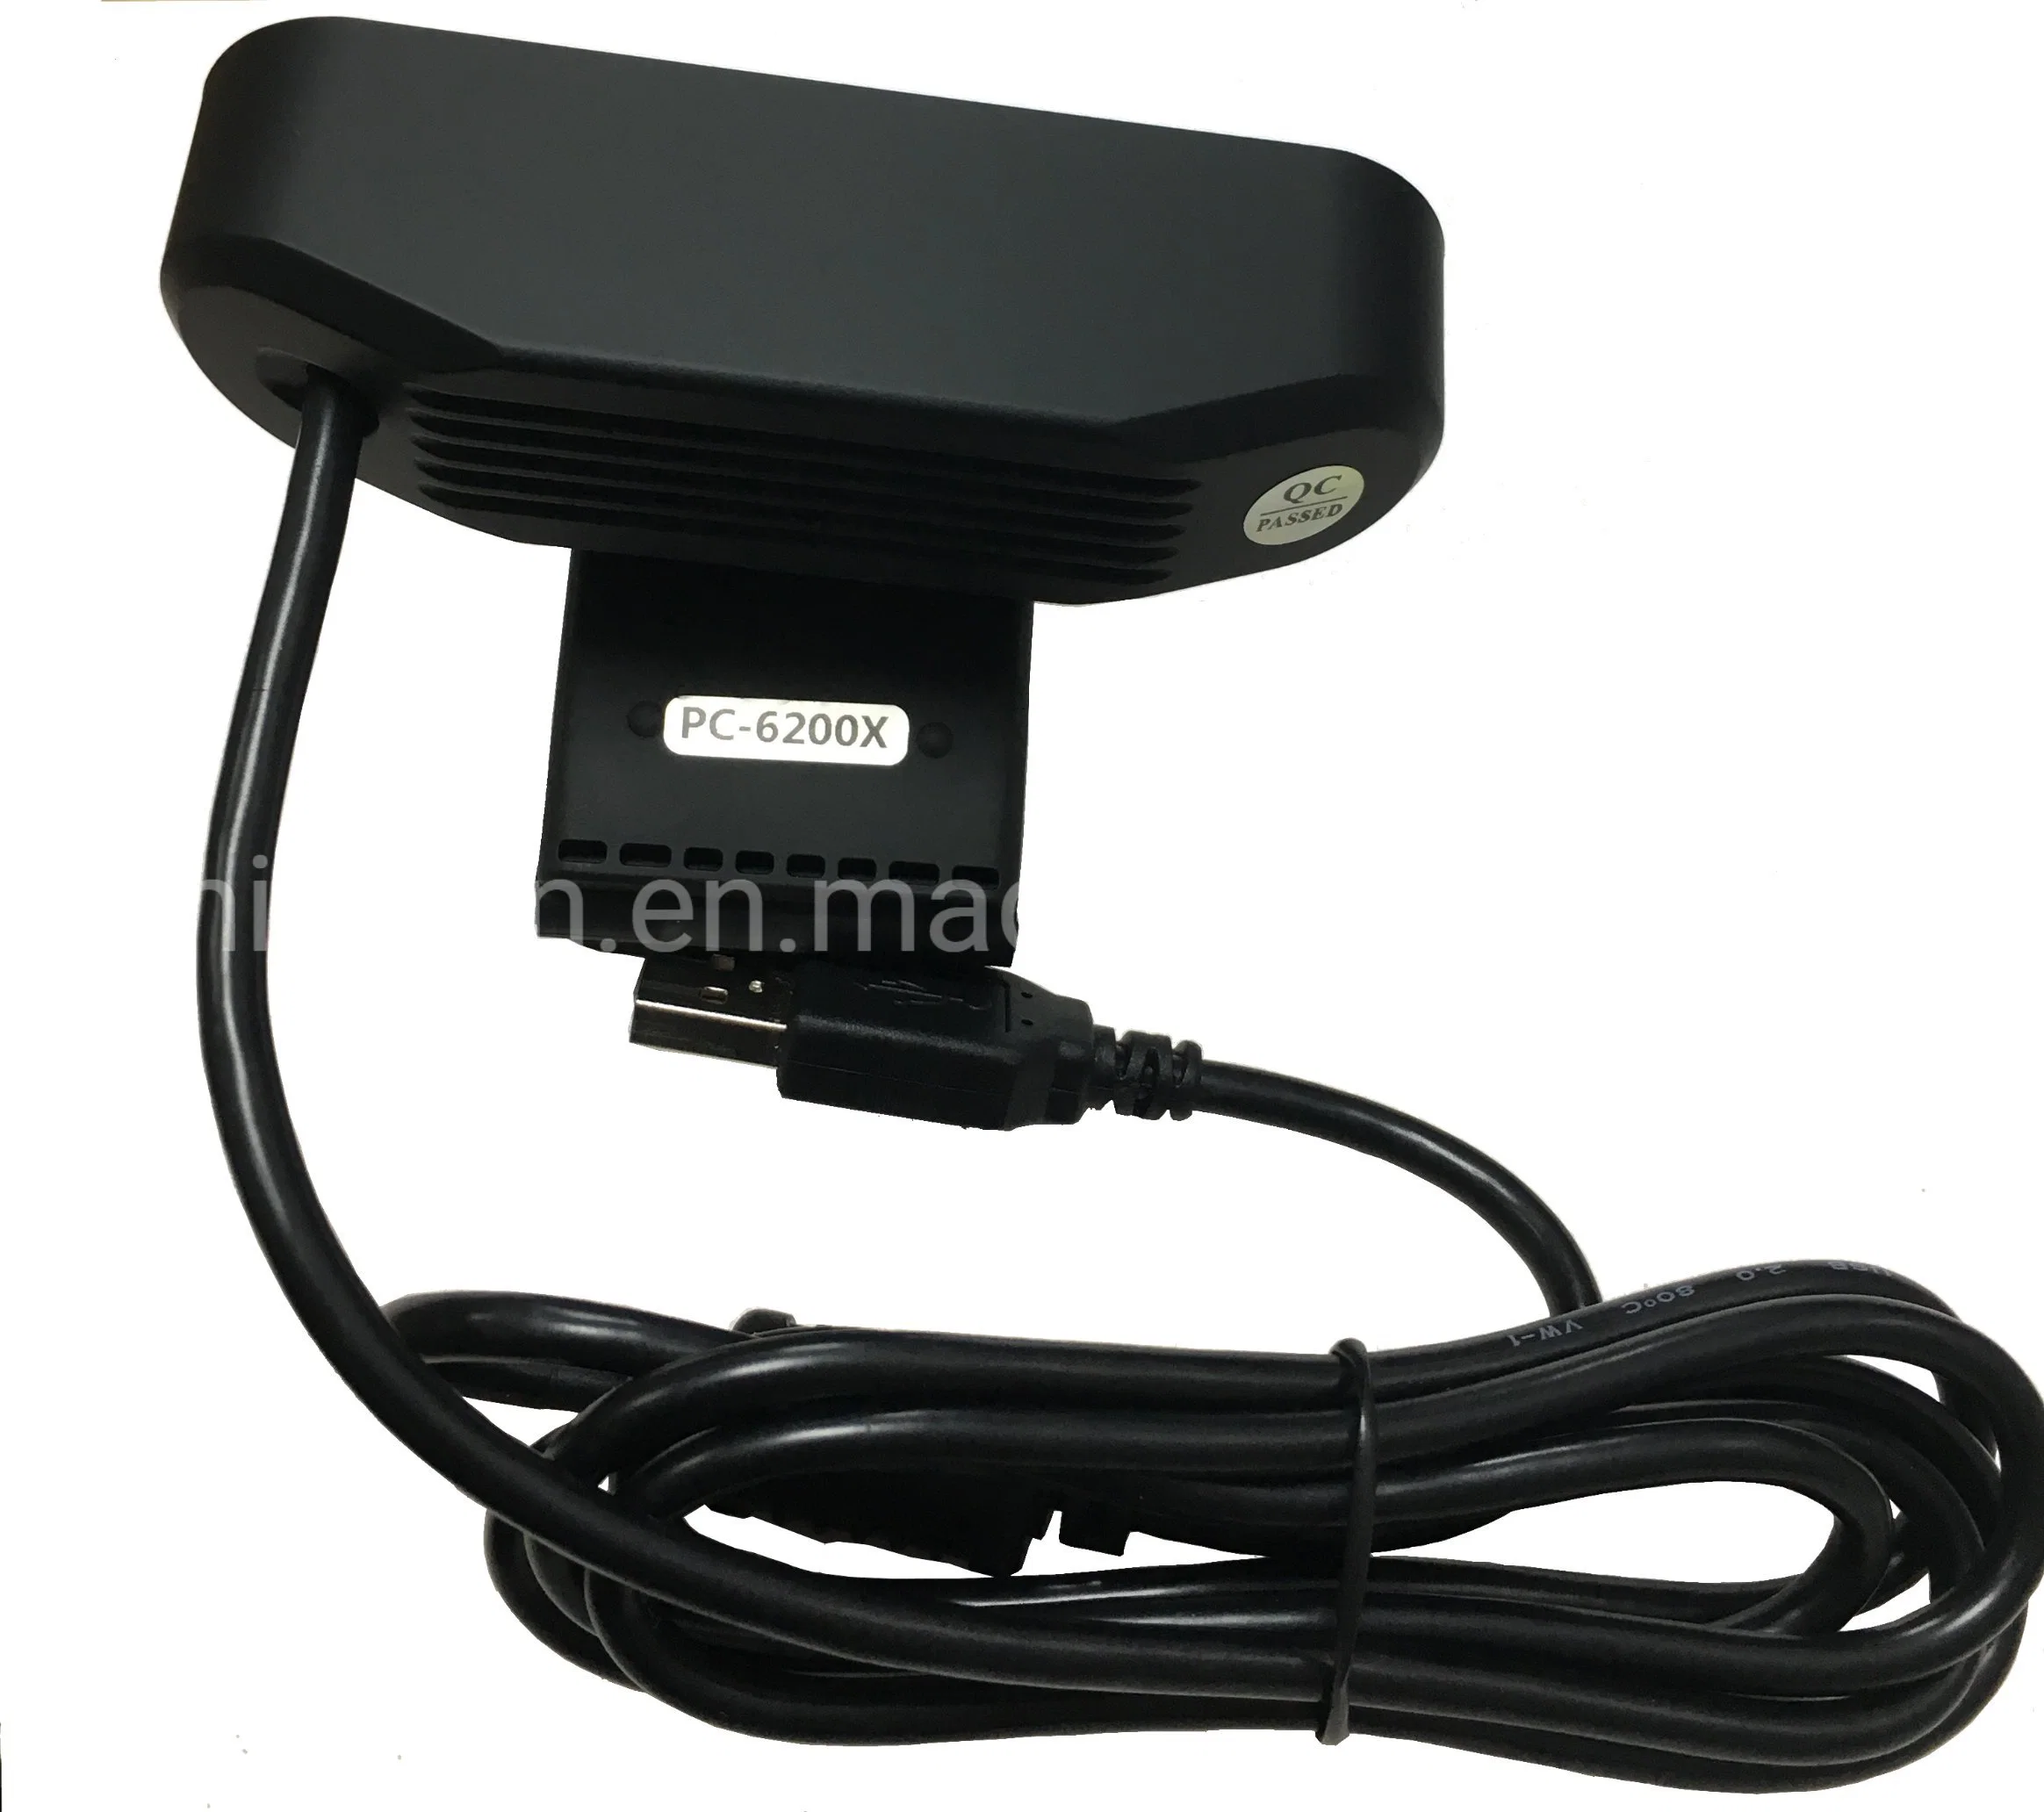 FHD 1080p Webcam mit Mikrofon für Laptop Computer Web-Kamera, USB Plug &amp; Play, kompatibel mit Skype Youtube Windows/Mac OS, für Live-Streaming, Aufnahme, Gaming